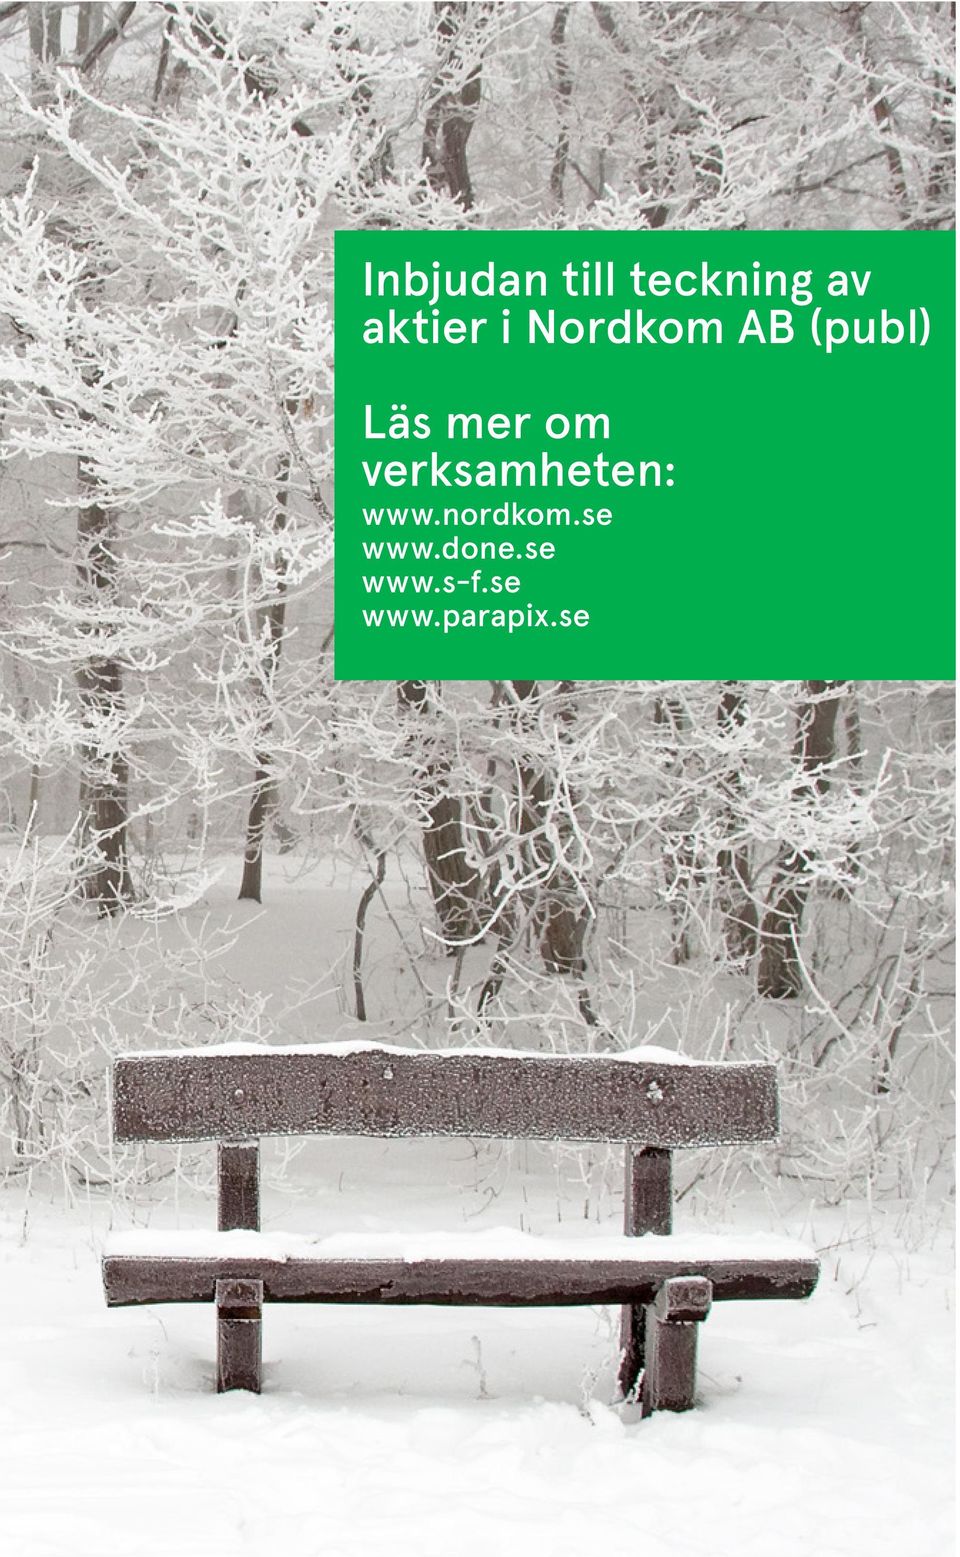 verksamheten: www.nordkom.se www.